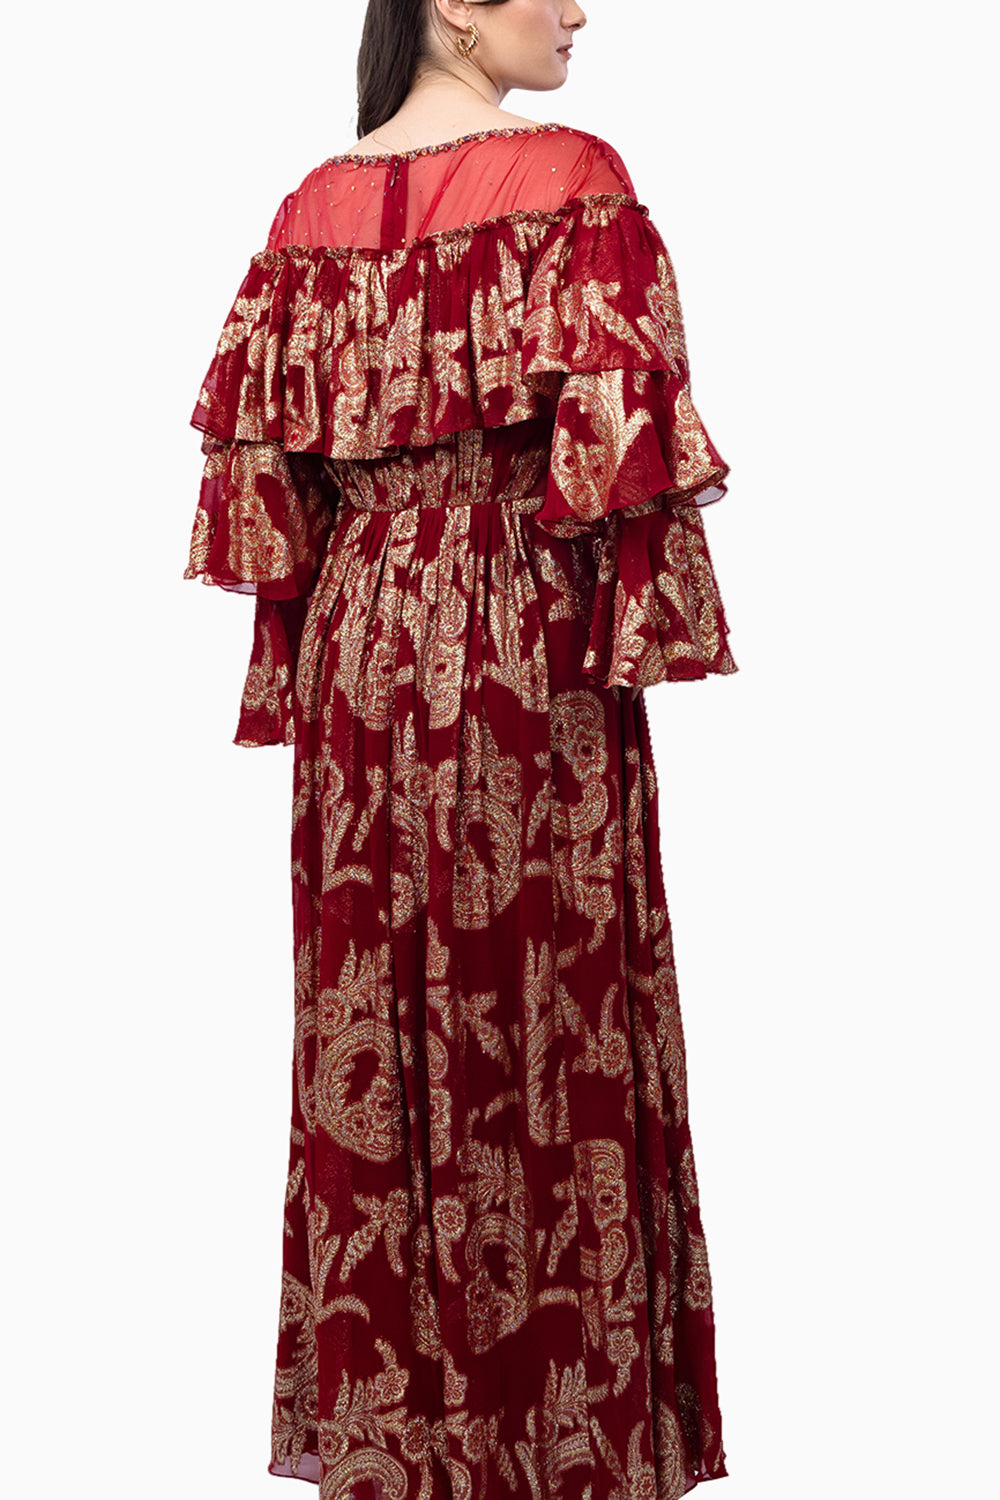 Radiant Red Brasso Dress